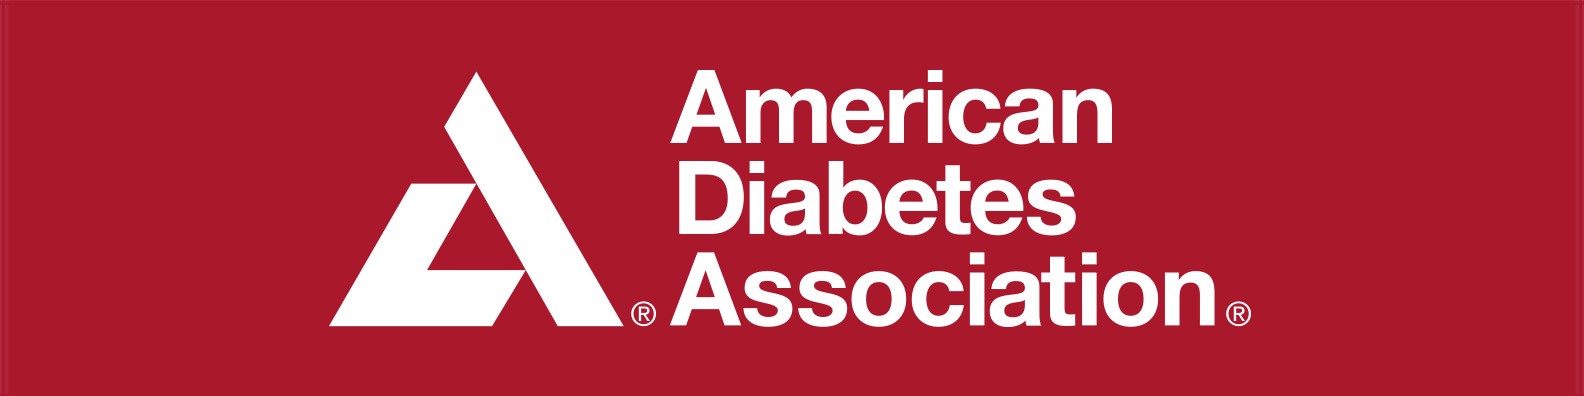 american diabetes association facebook